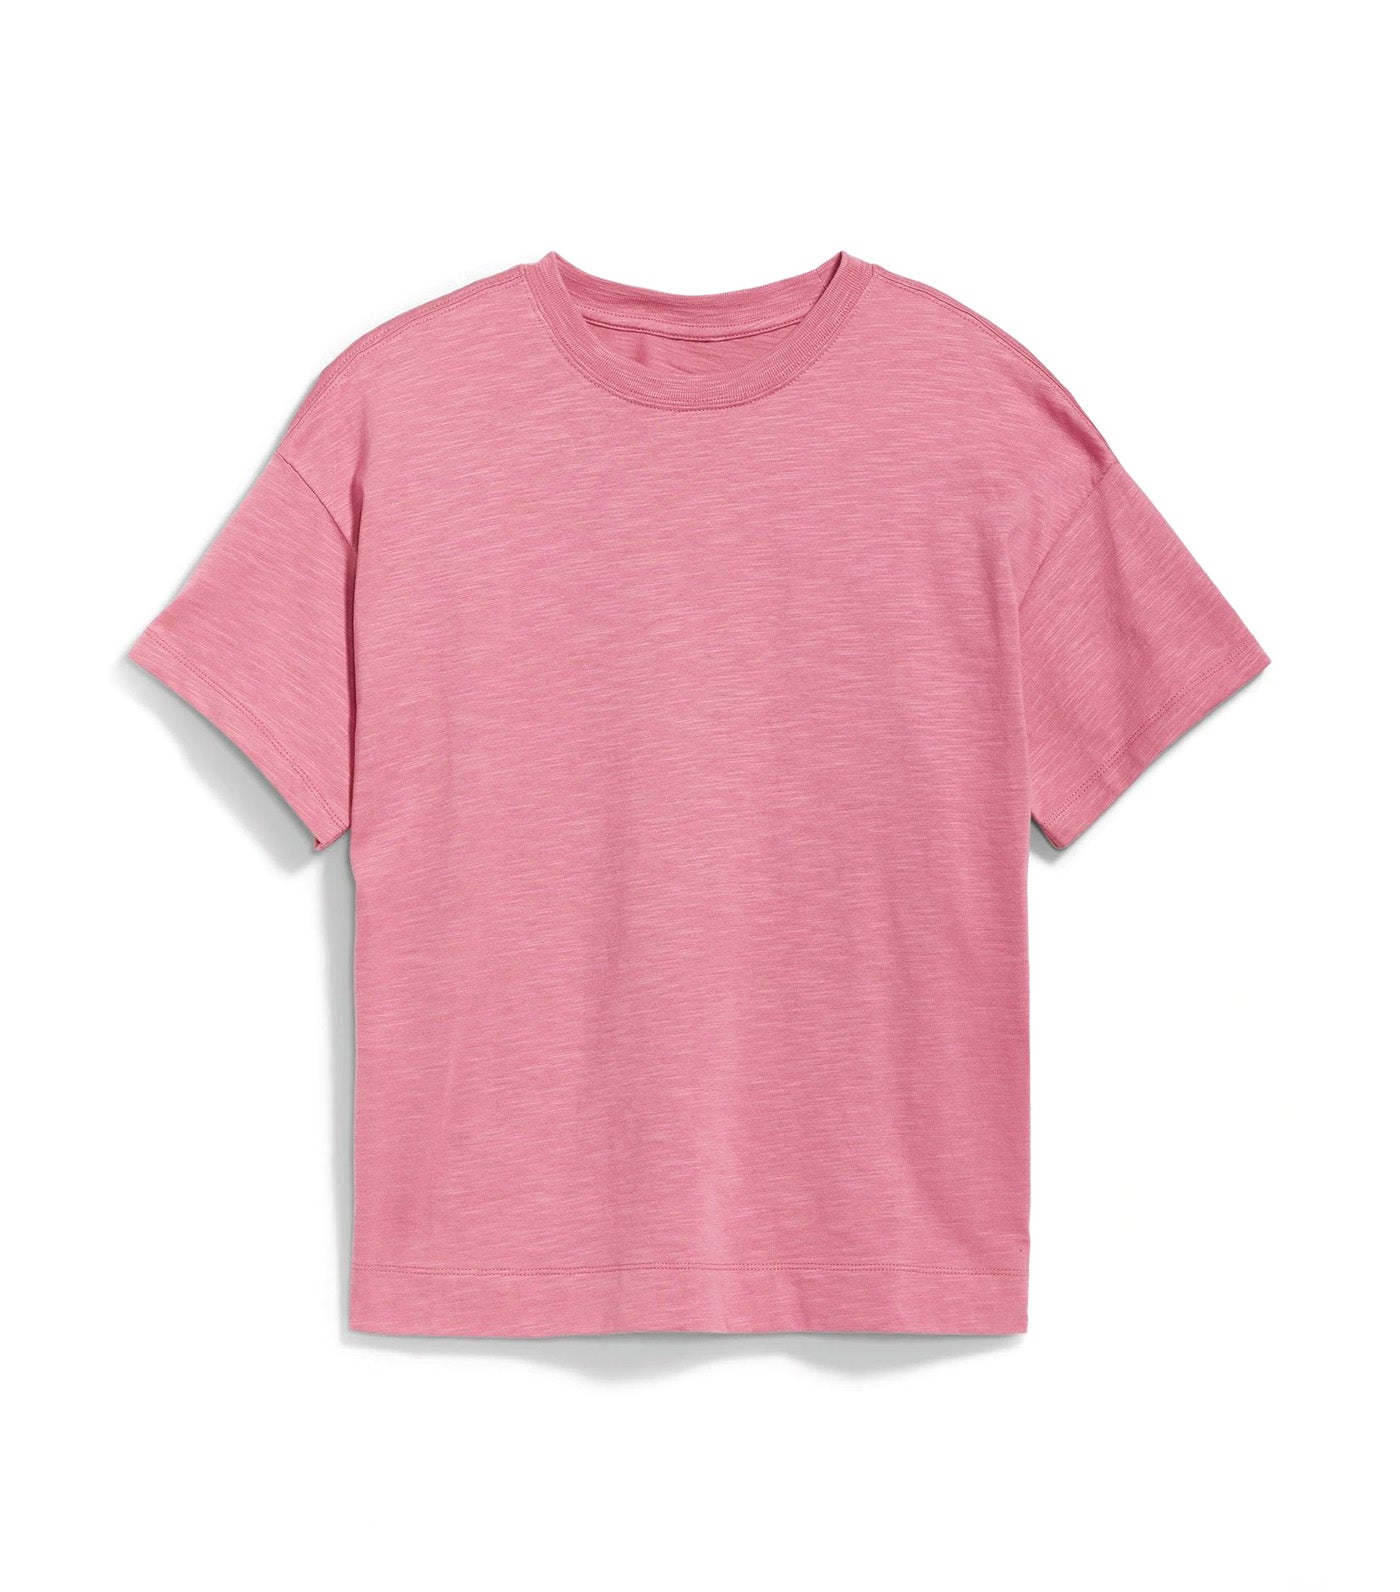 Vintage Slub-Knit T-Shirt for Women Rose Cloud